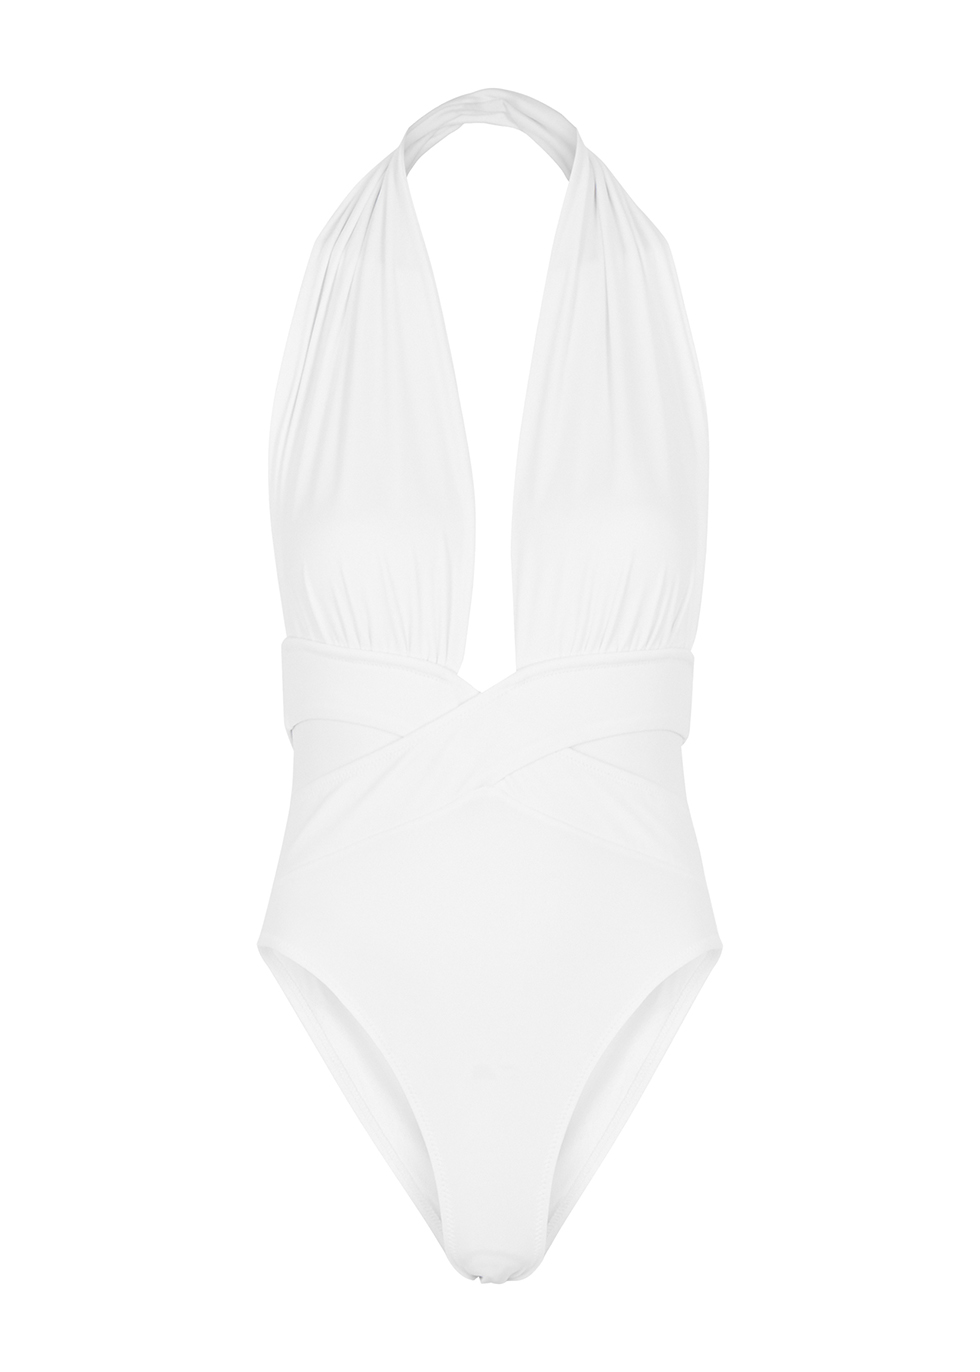 OYE Swimwear Roman white plunge swimsuit - Harvey Nichols